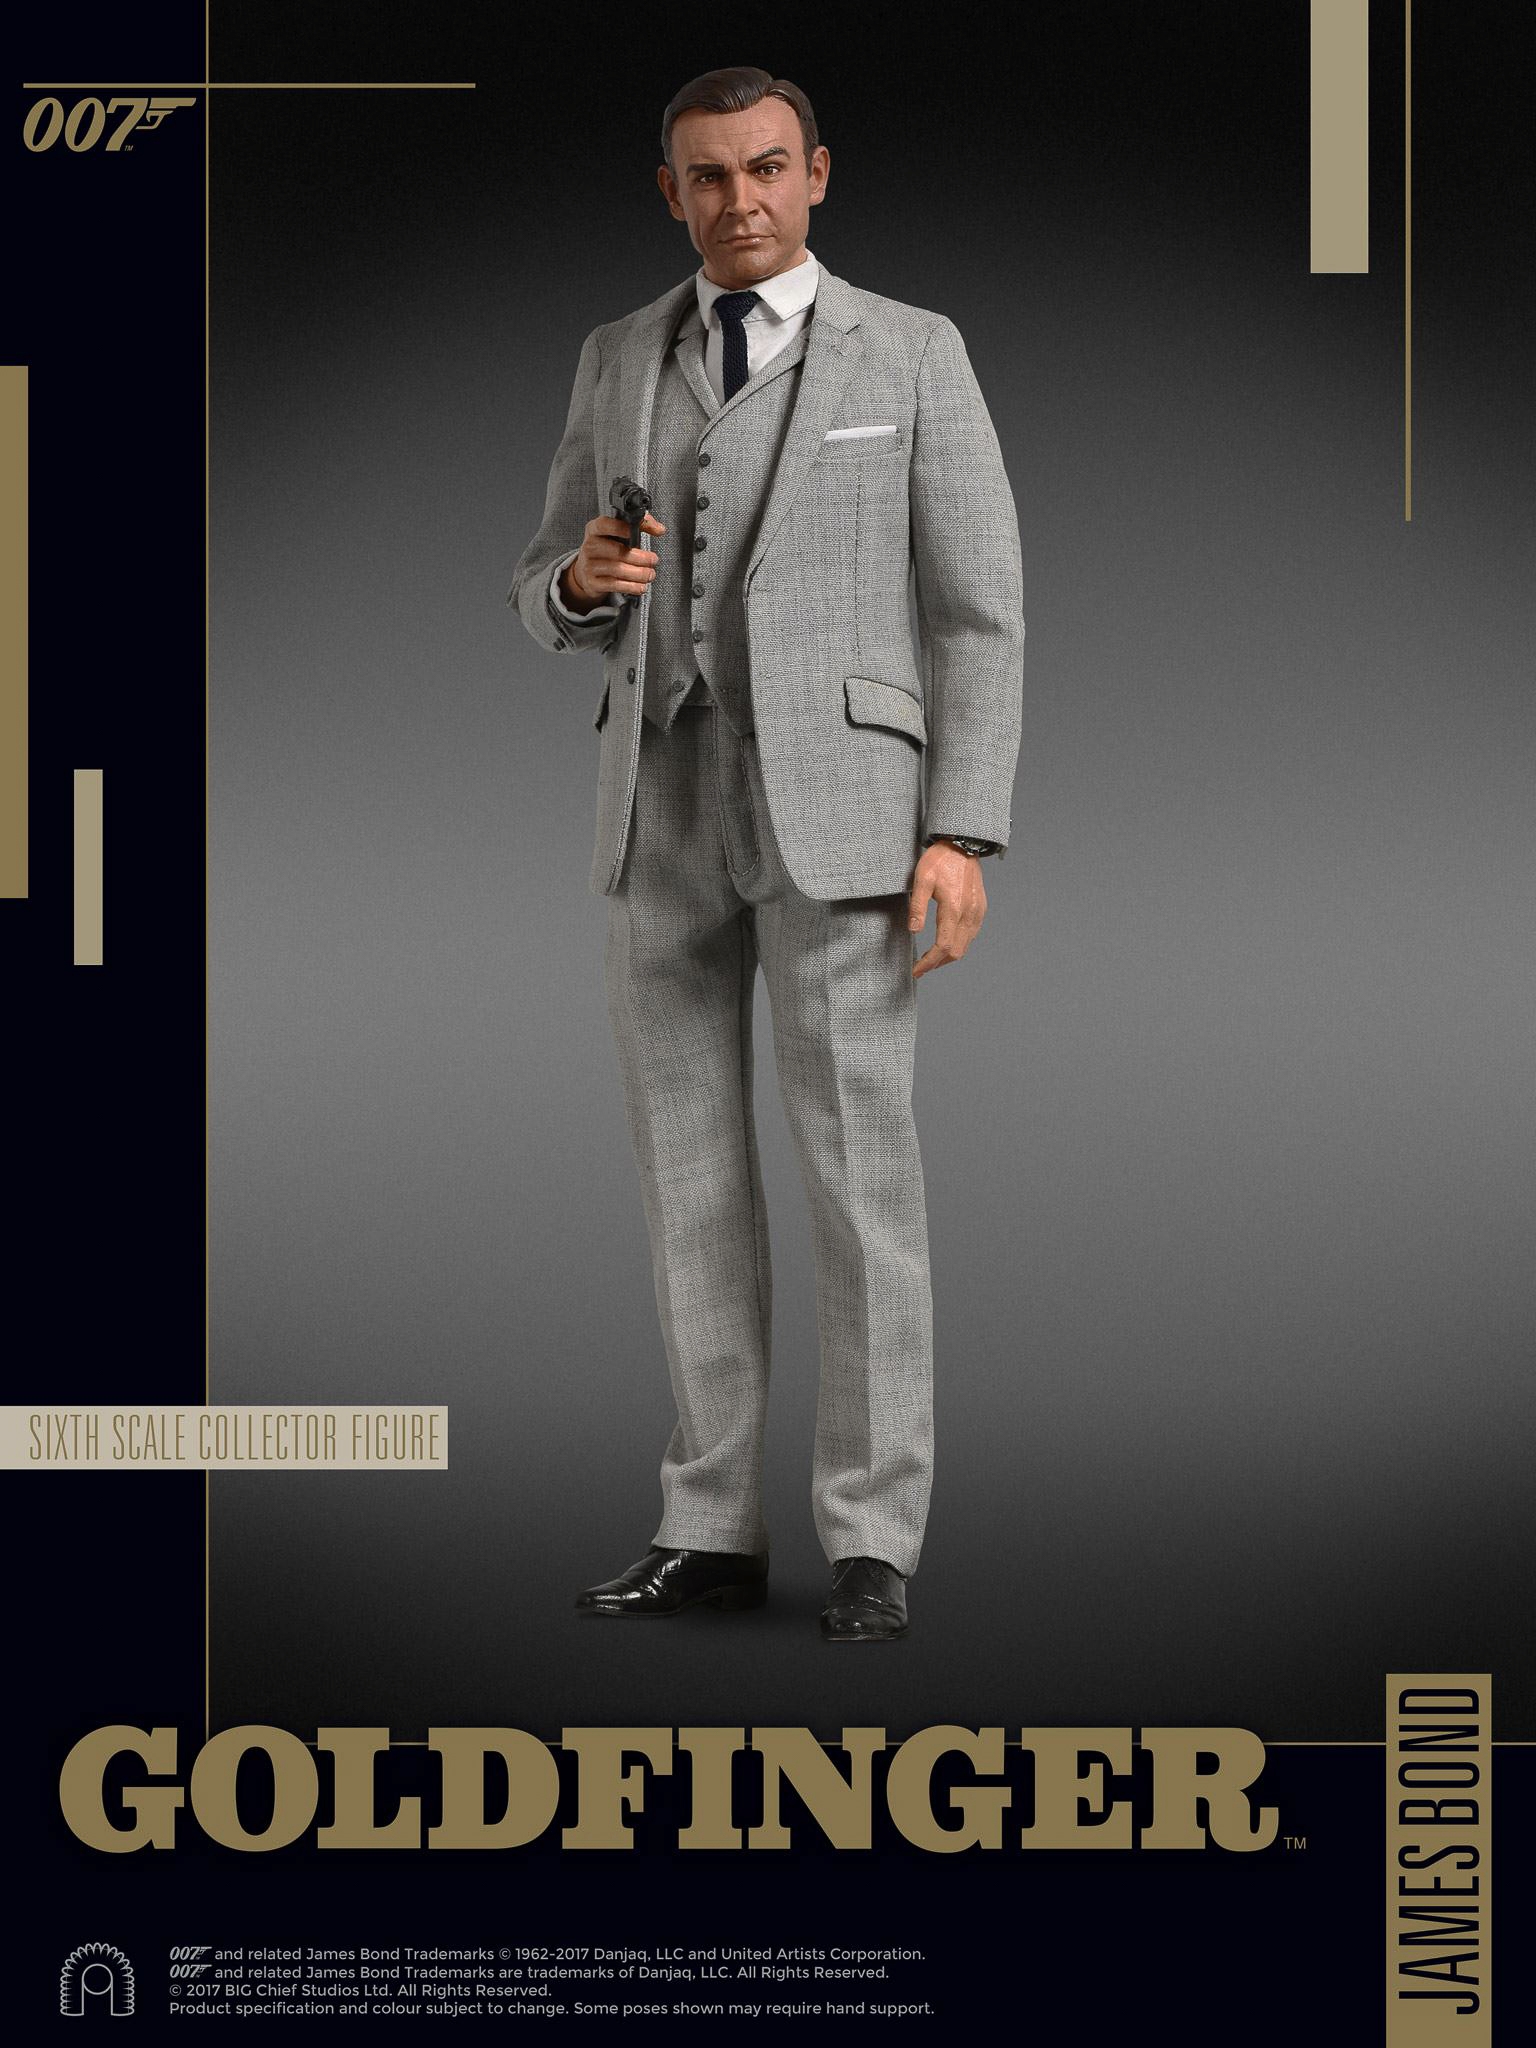 Big-Chief-James-Bond-Goldfinger-Oddjob-Full-Reveal-006.jpg